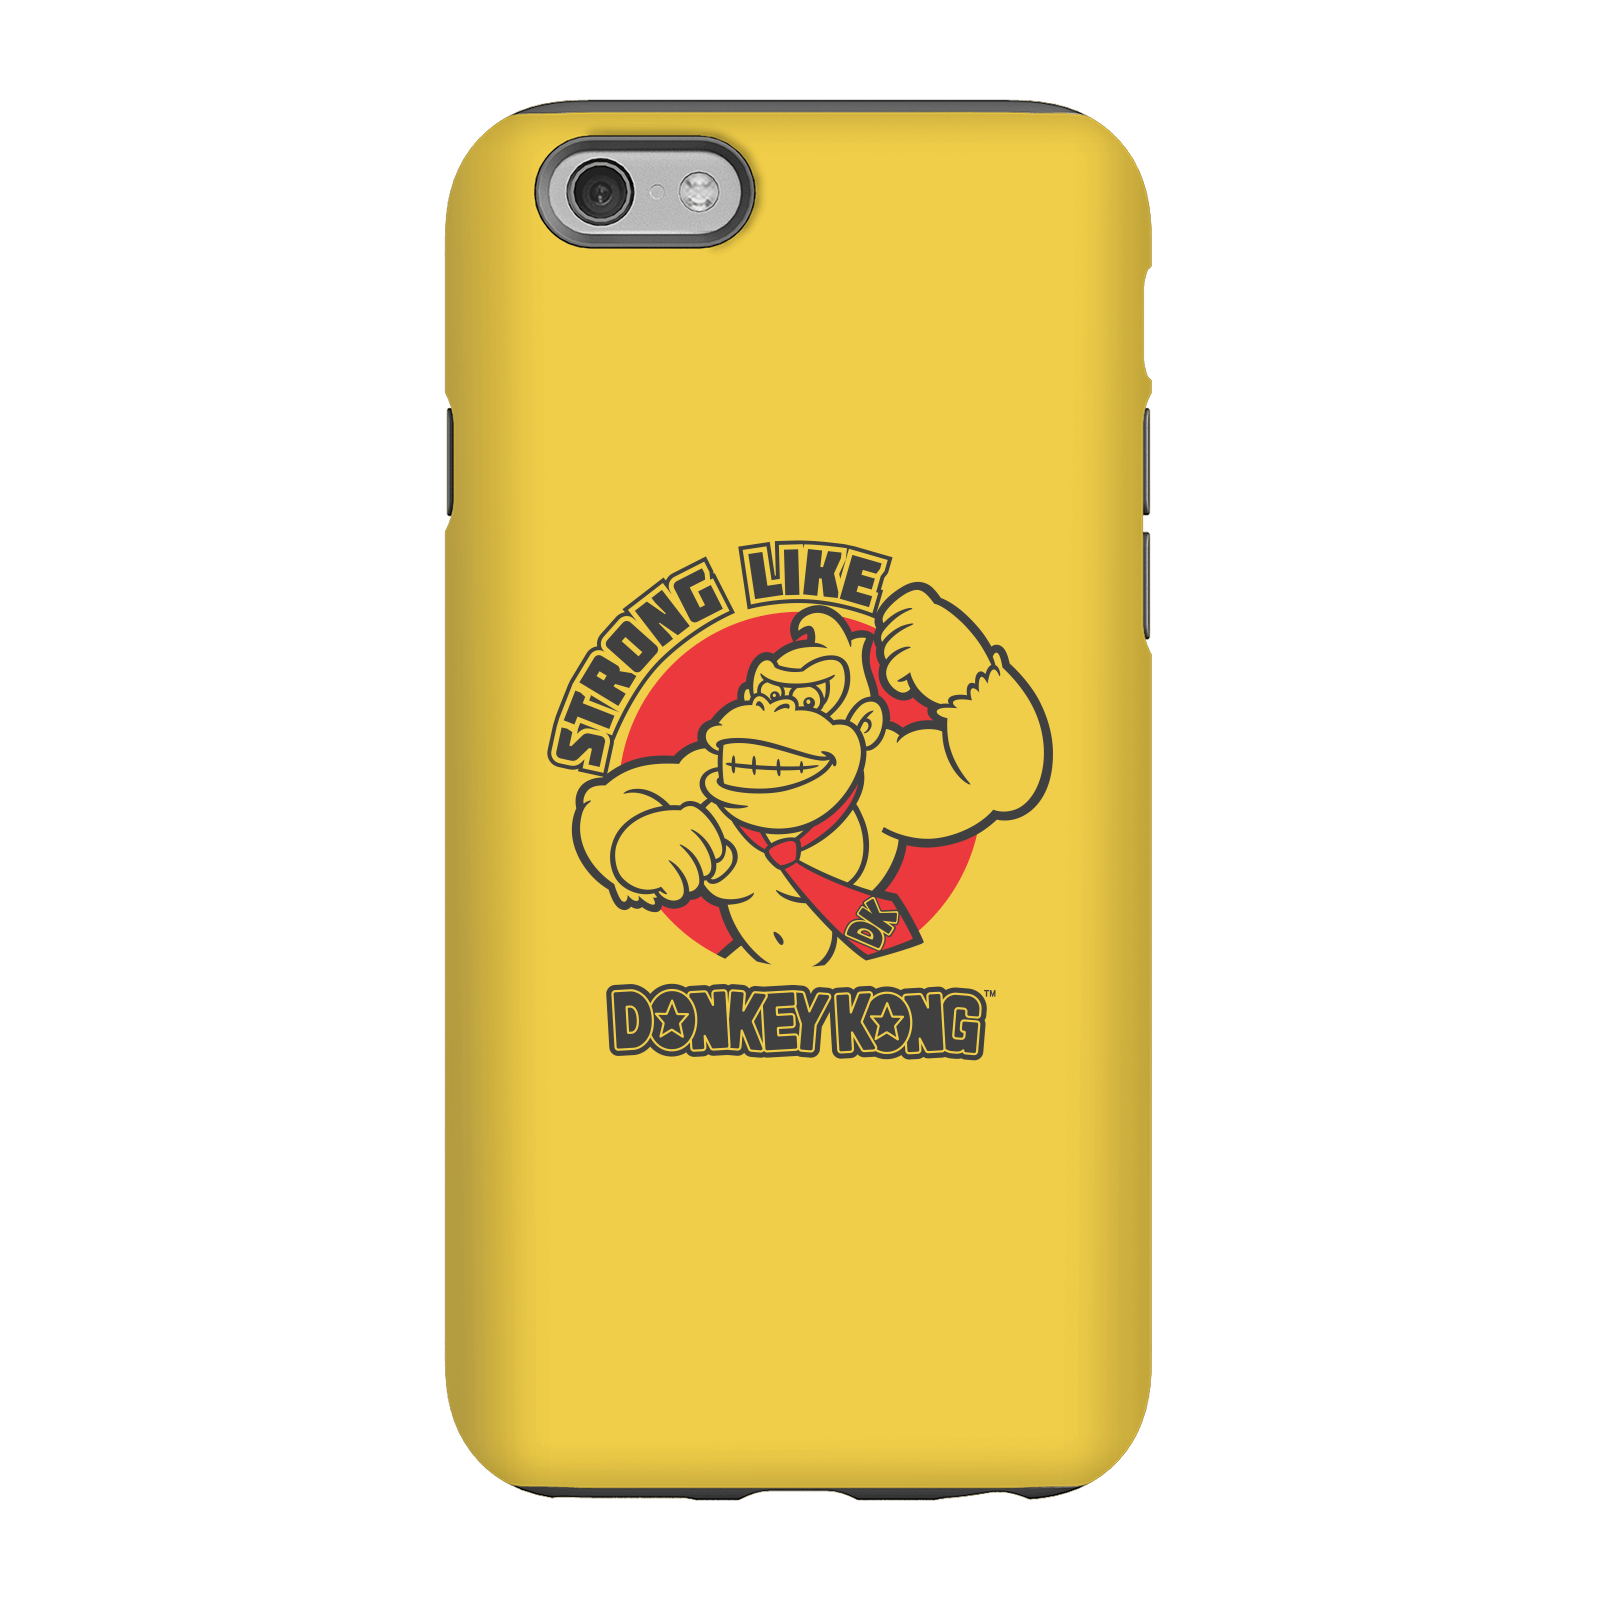 Nintendo Donkey Kong Strong Like Donkey Kong Phone Case - iPhone 6S - Tough Case - Matte